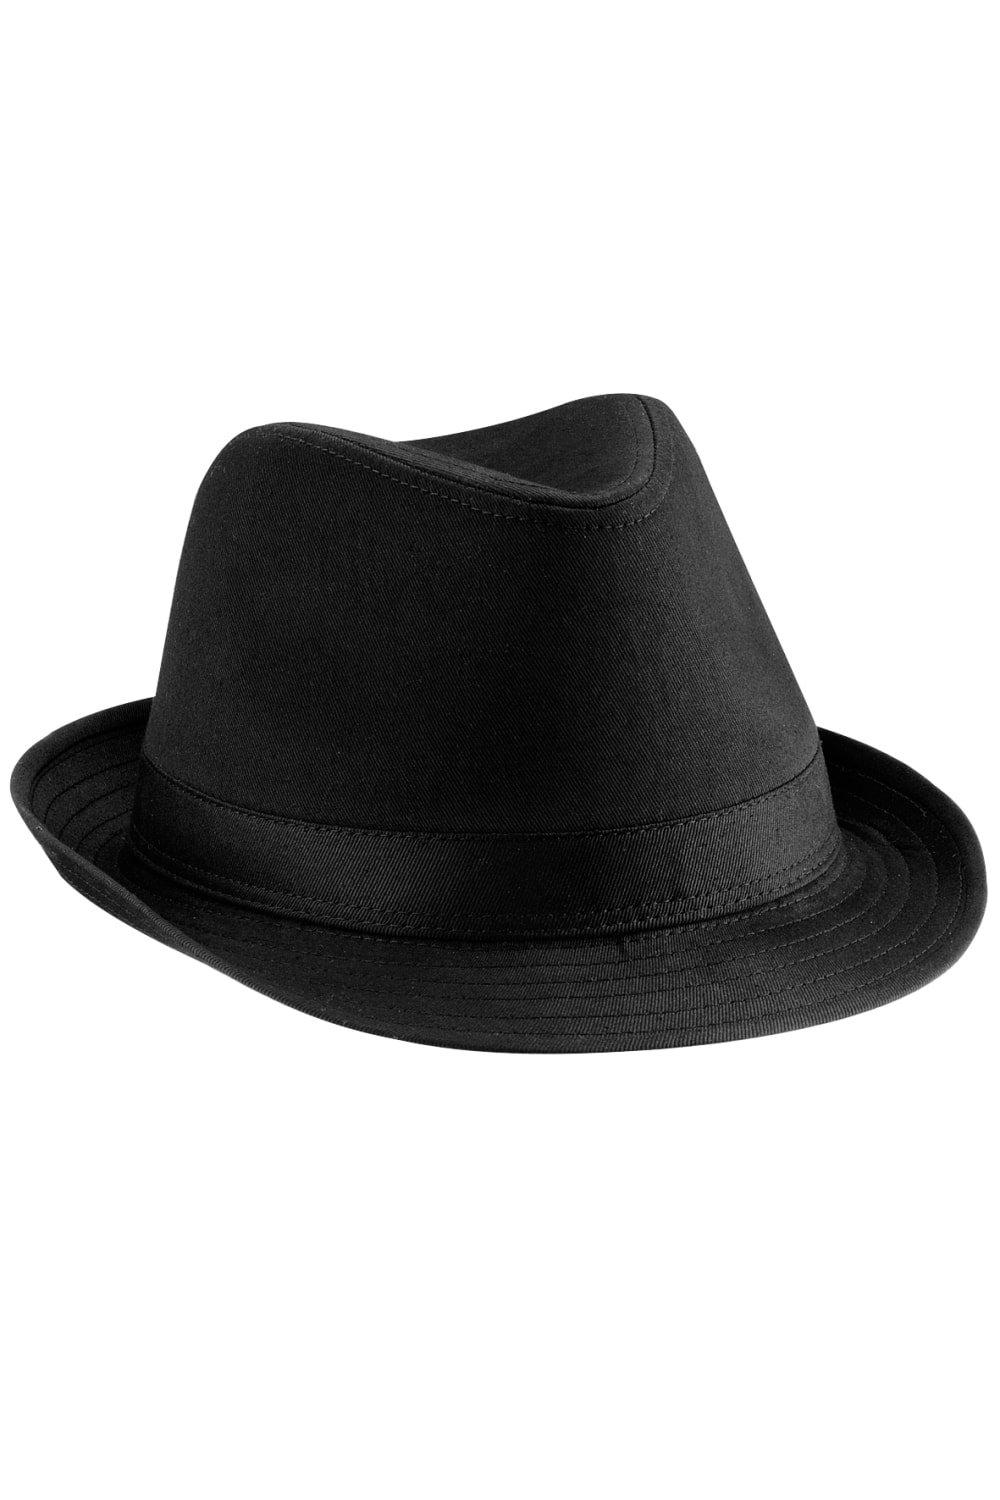 шляпа Федора Beechfield, черный мешки для пылесосов bork v704 тип v7d3 ozone microne m 57 арт m 57